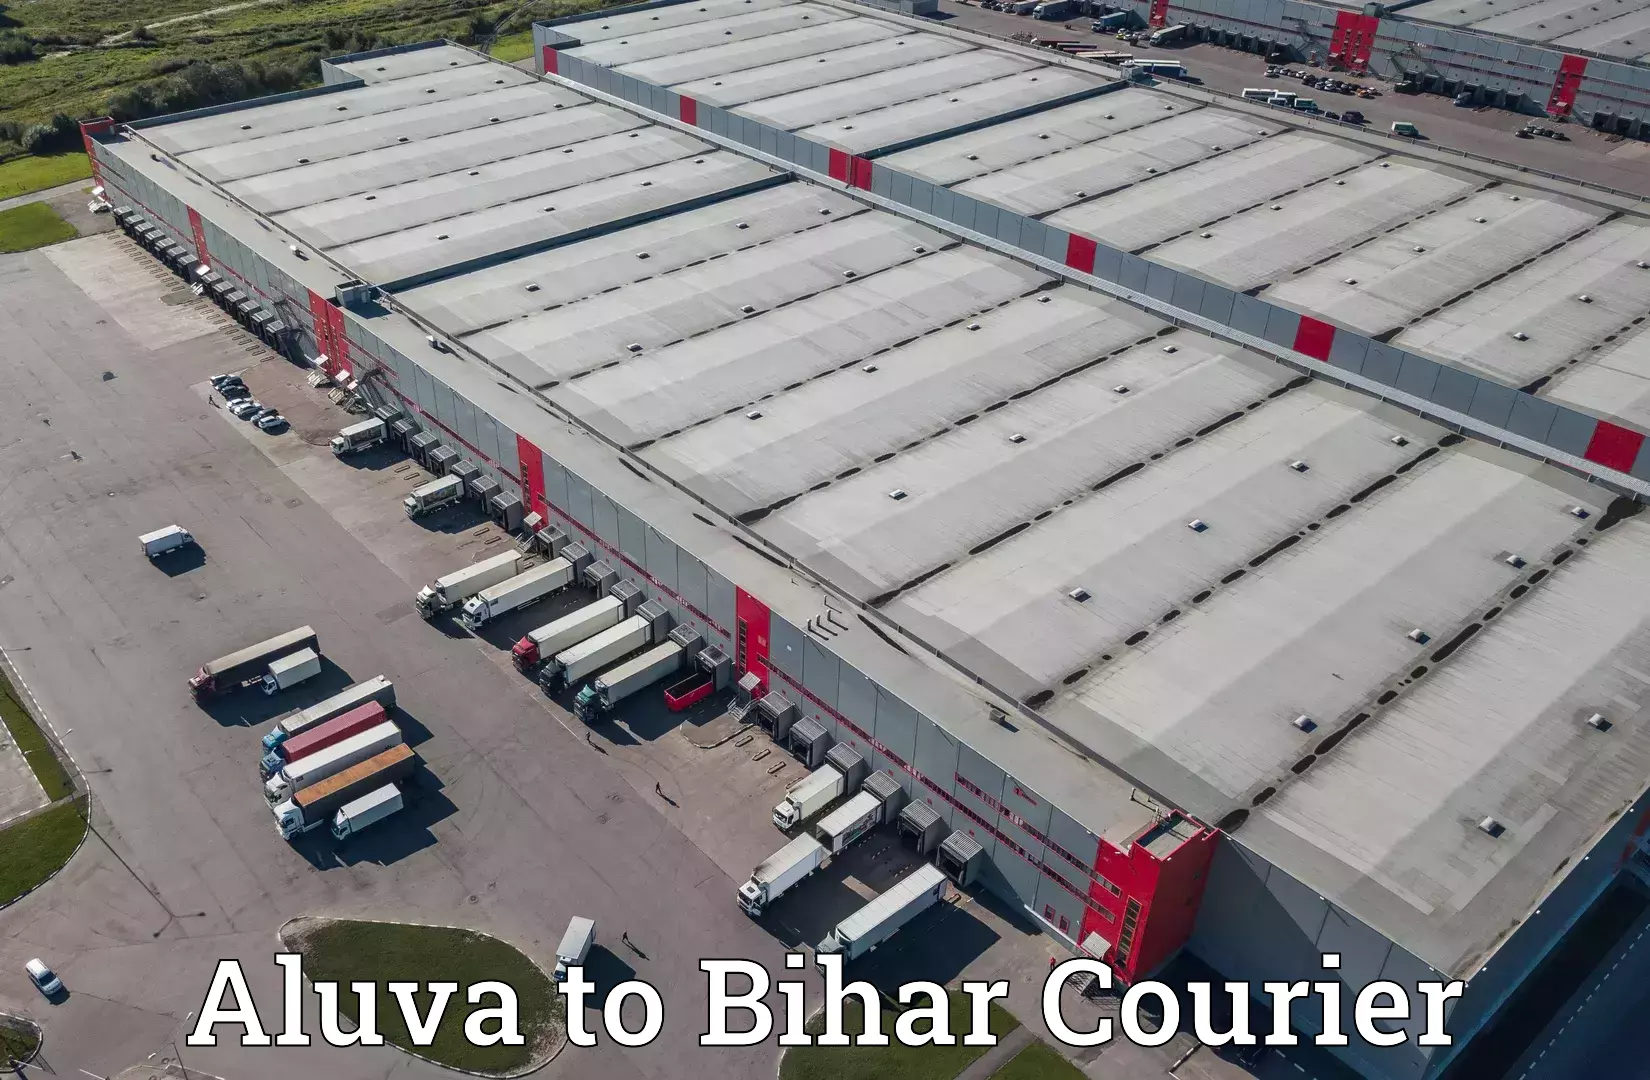 Digital courier platforms Aluva to Bihar